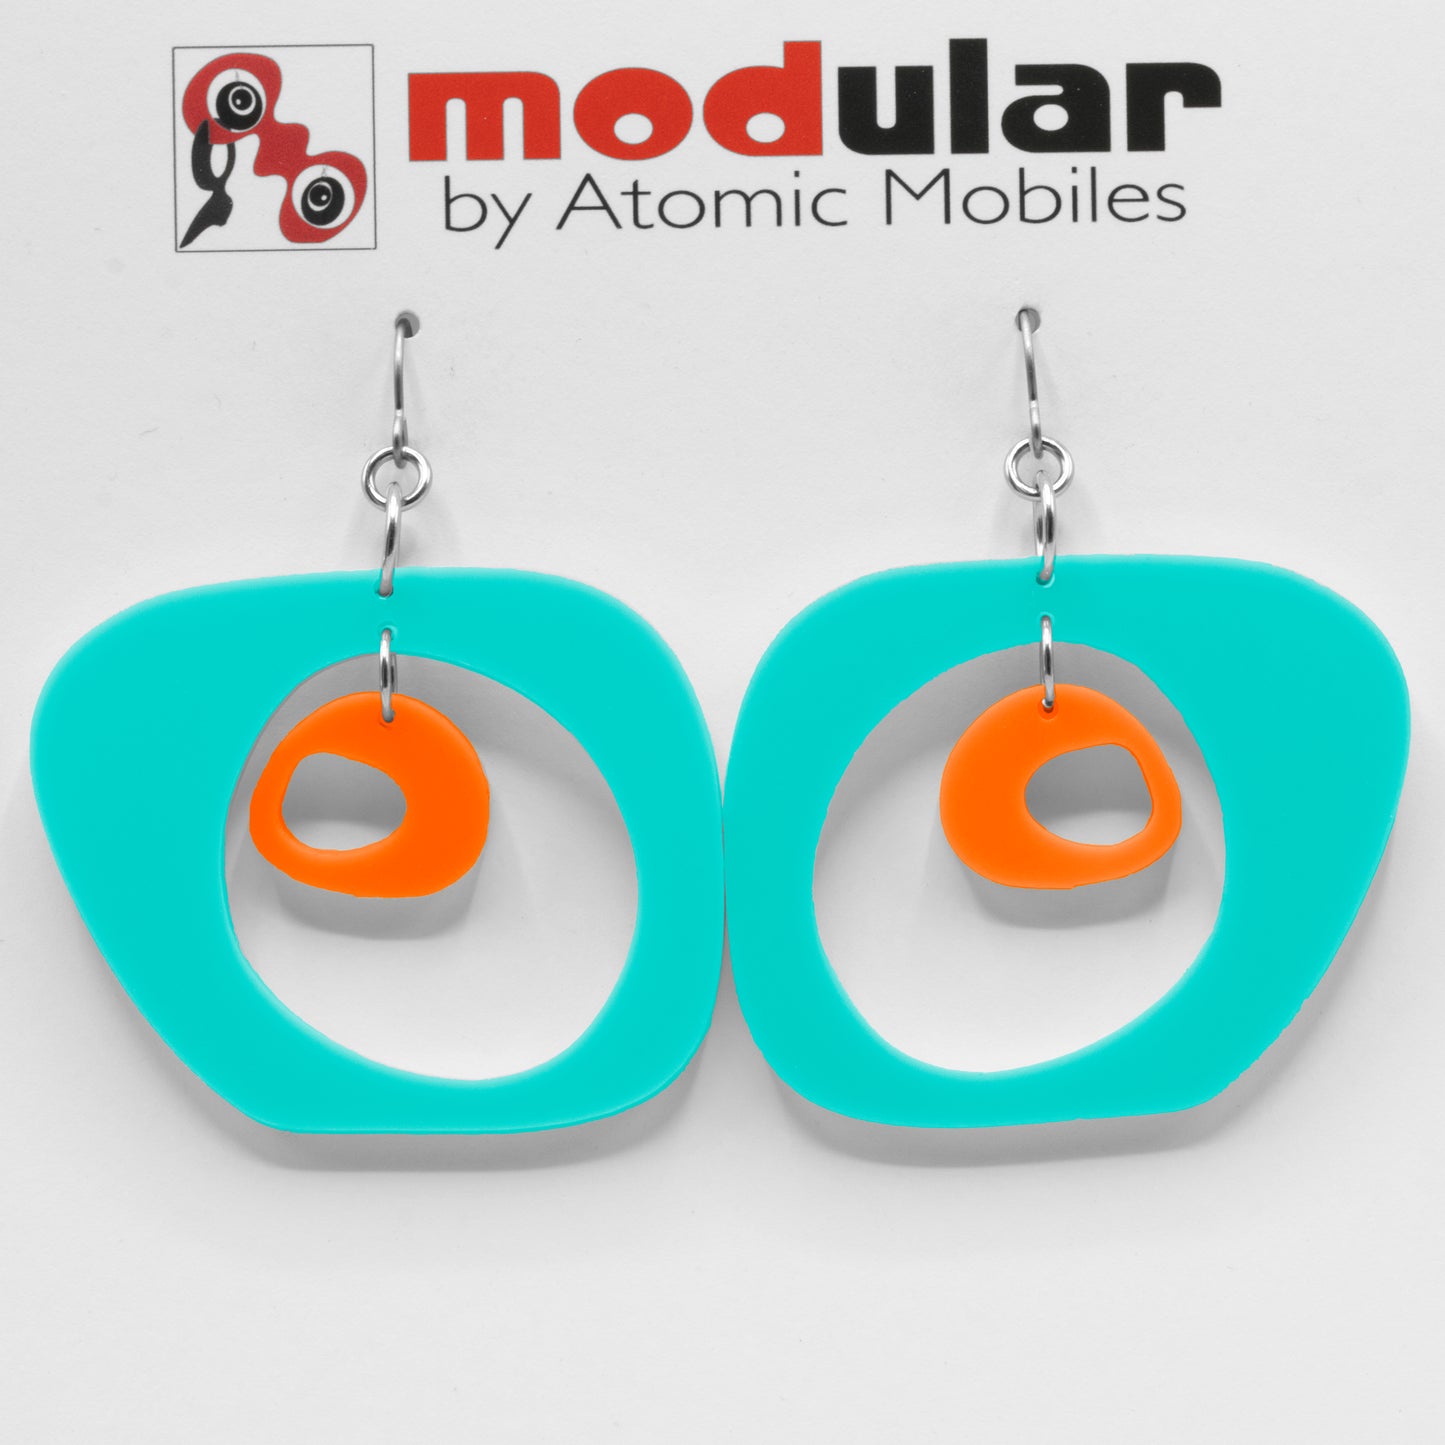 MODular Earrings - Paris Statement Earrings in Aqua and Orange by AtomicMobiles.com - retro era inspired mod handmade jewelry